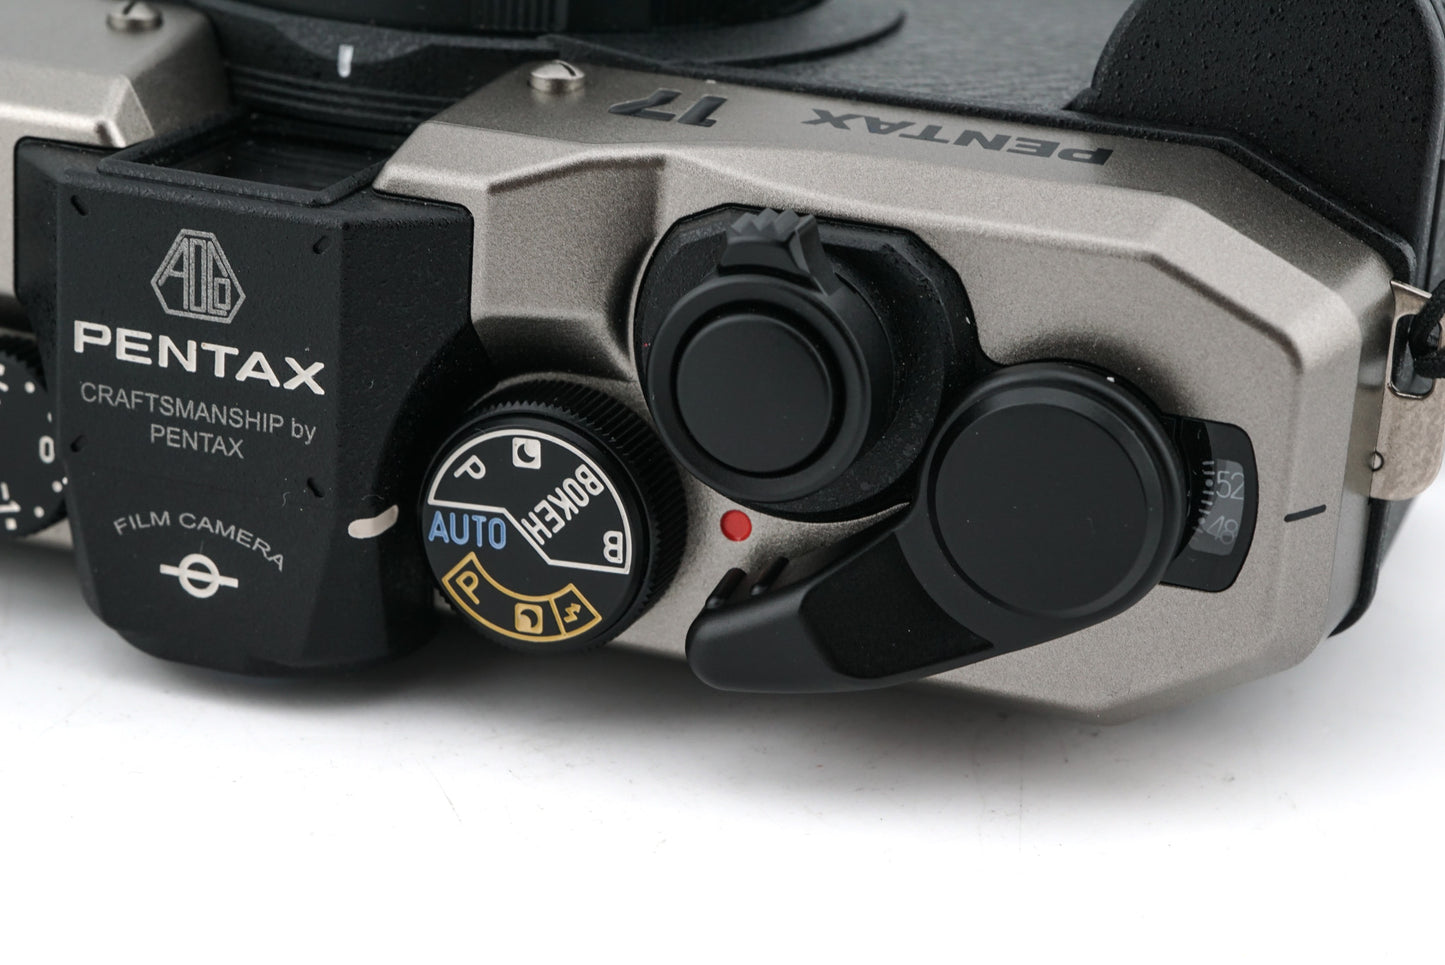 Pentax 17 Film Camera Exposure Mode Dial and Film Advance Lever